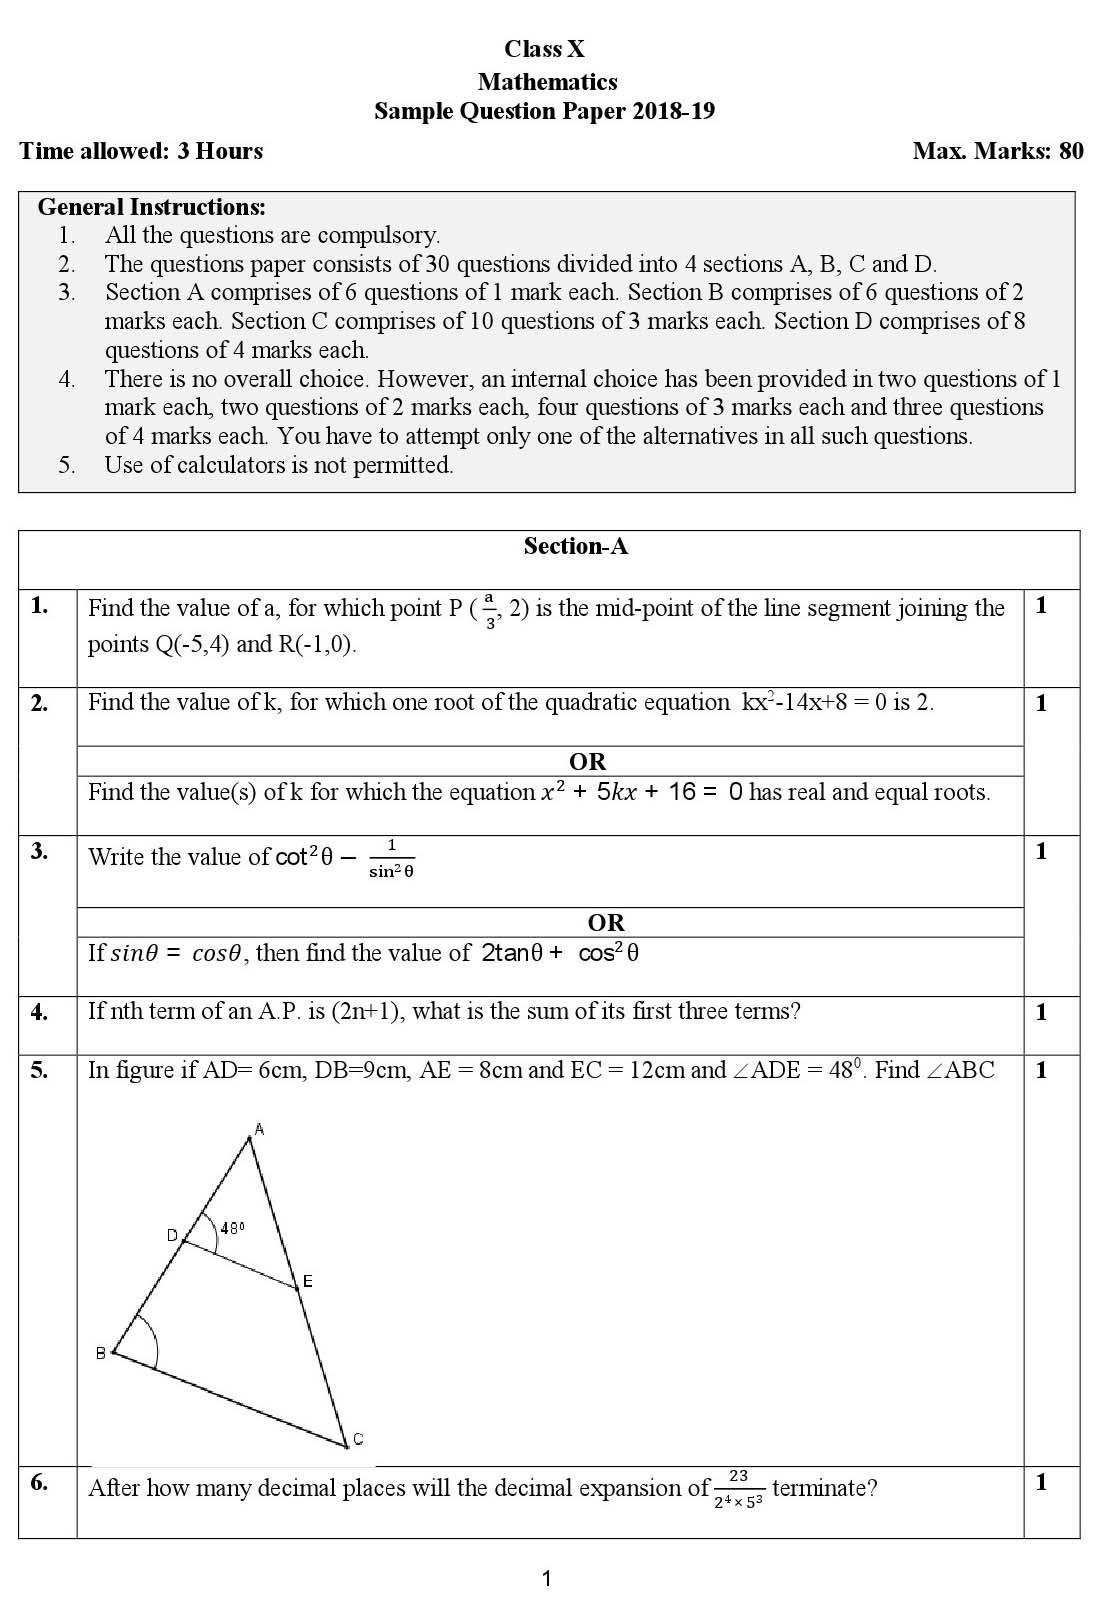 Mathematics CBSE Class X Sample Question Paper 2018 19 - Image 1